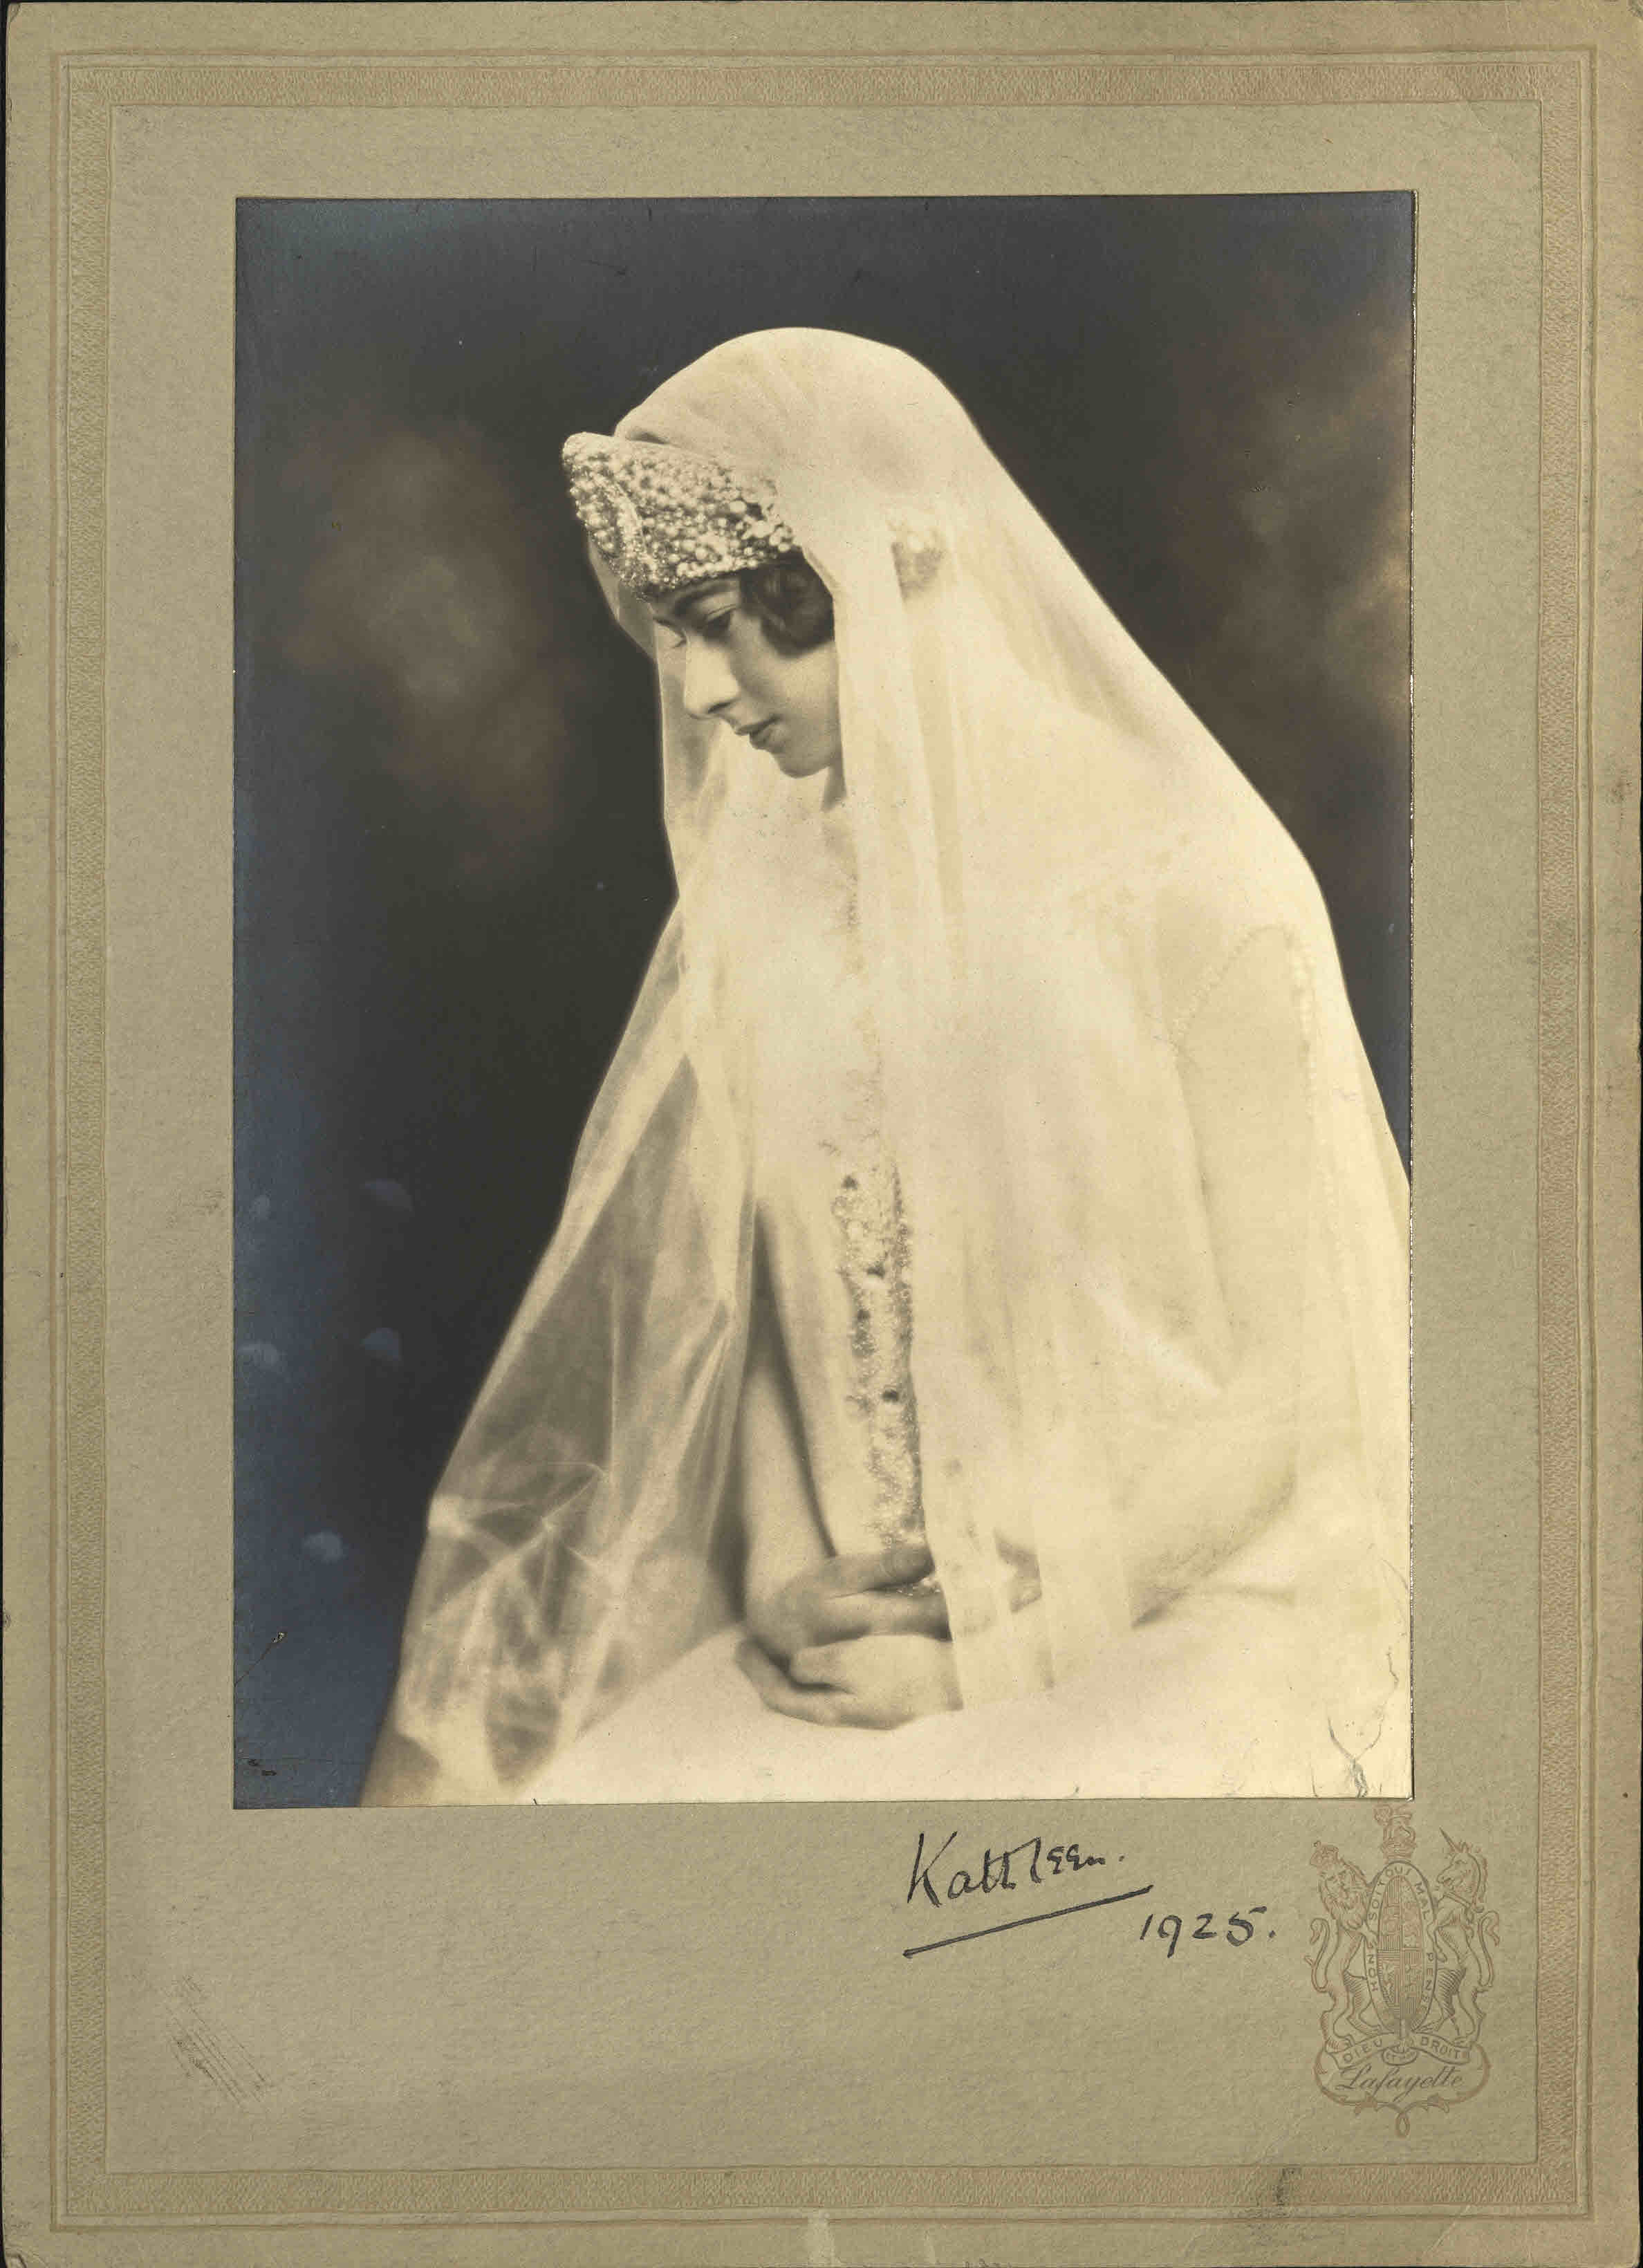 Kathleen Corry in wedding dress